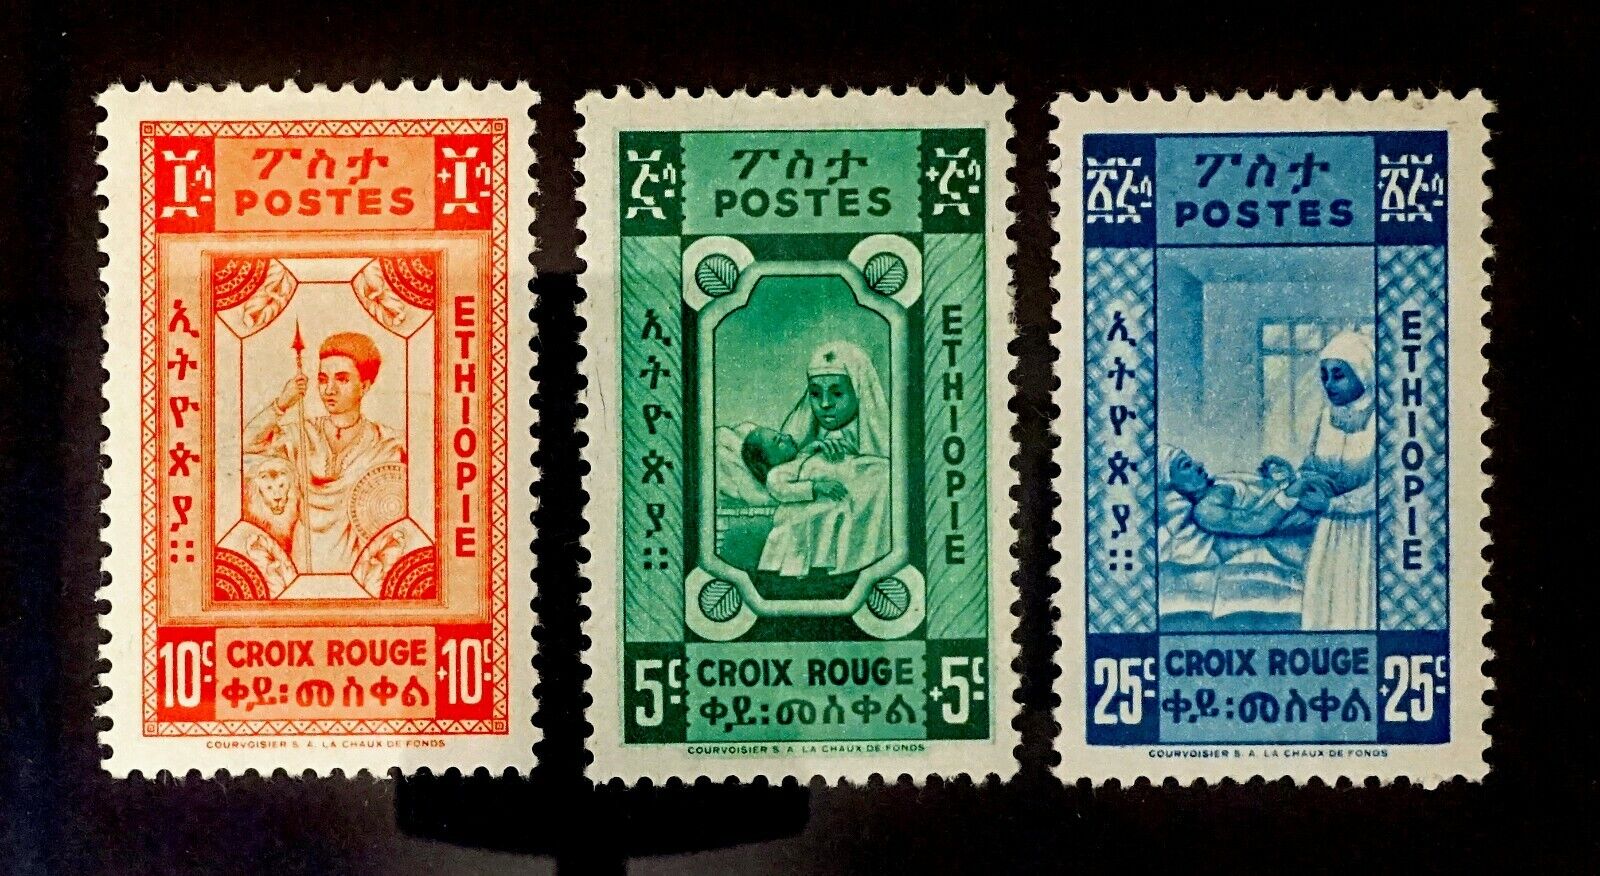 ETHIOPIA - Lot of 3 Vintage (1945) Postage Stamps; Scott #268-270; CV=$4.50 Без бренда